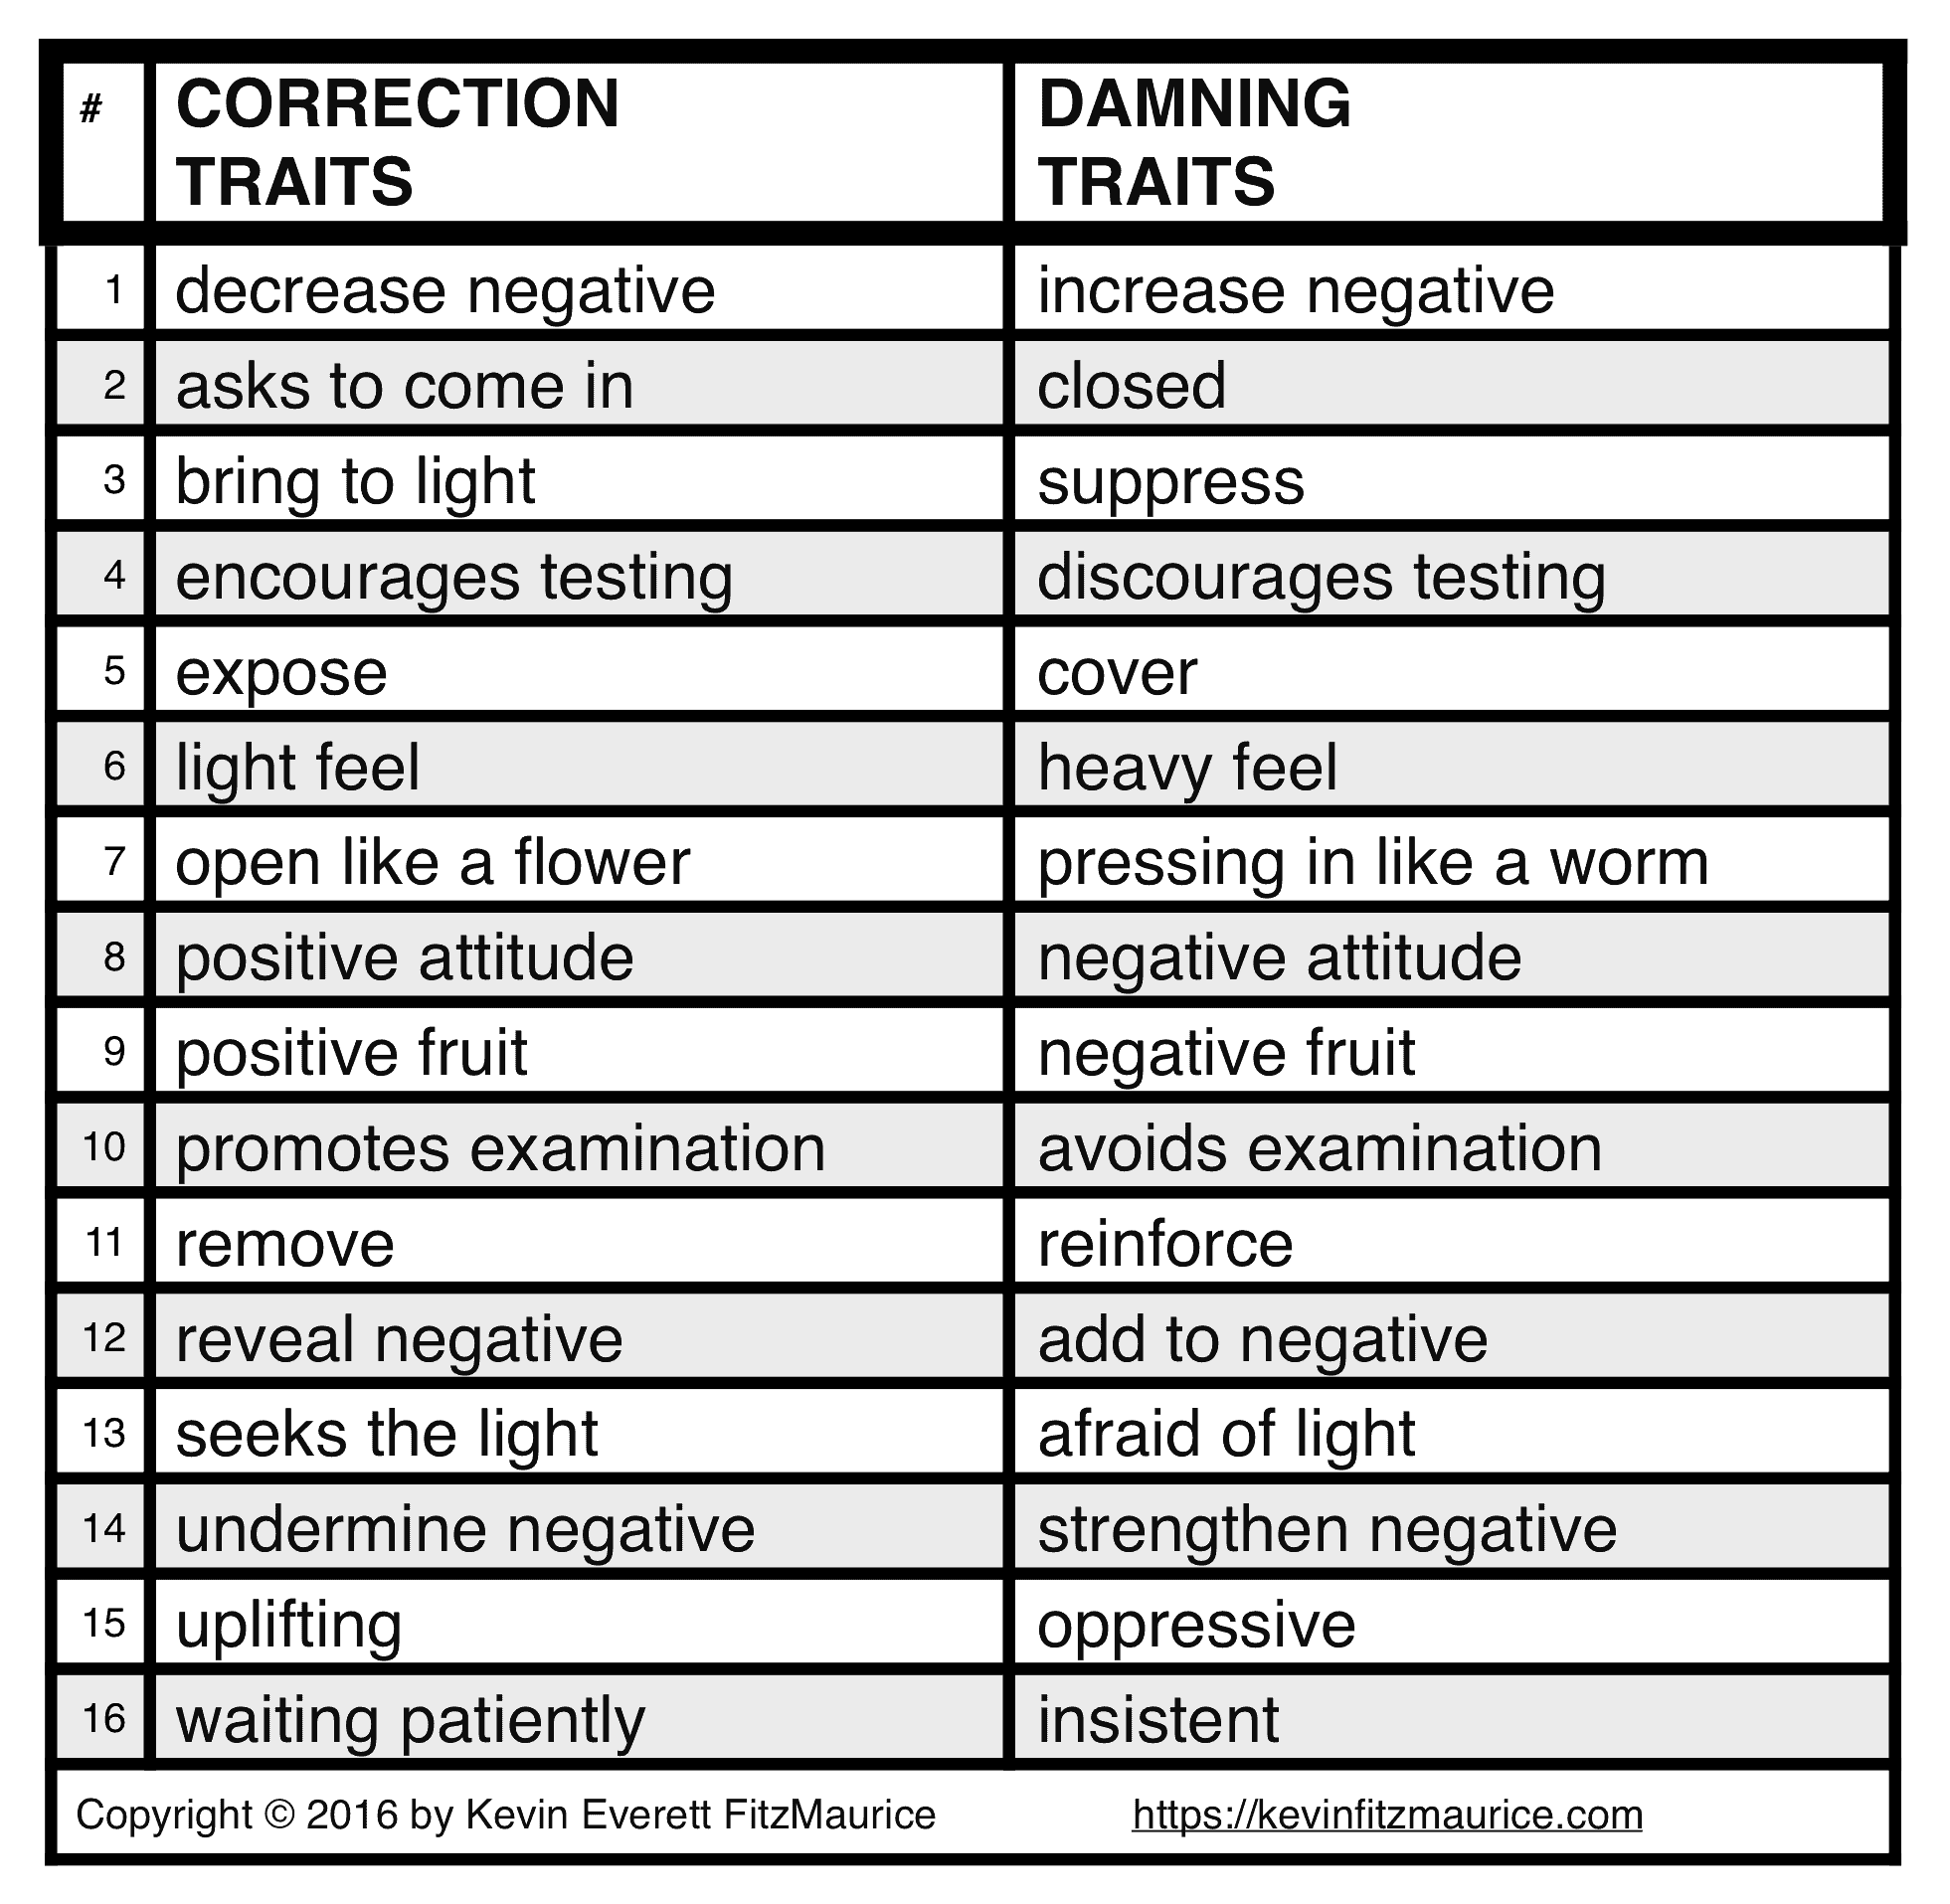 comparison of correction traits